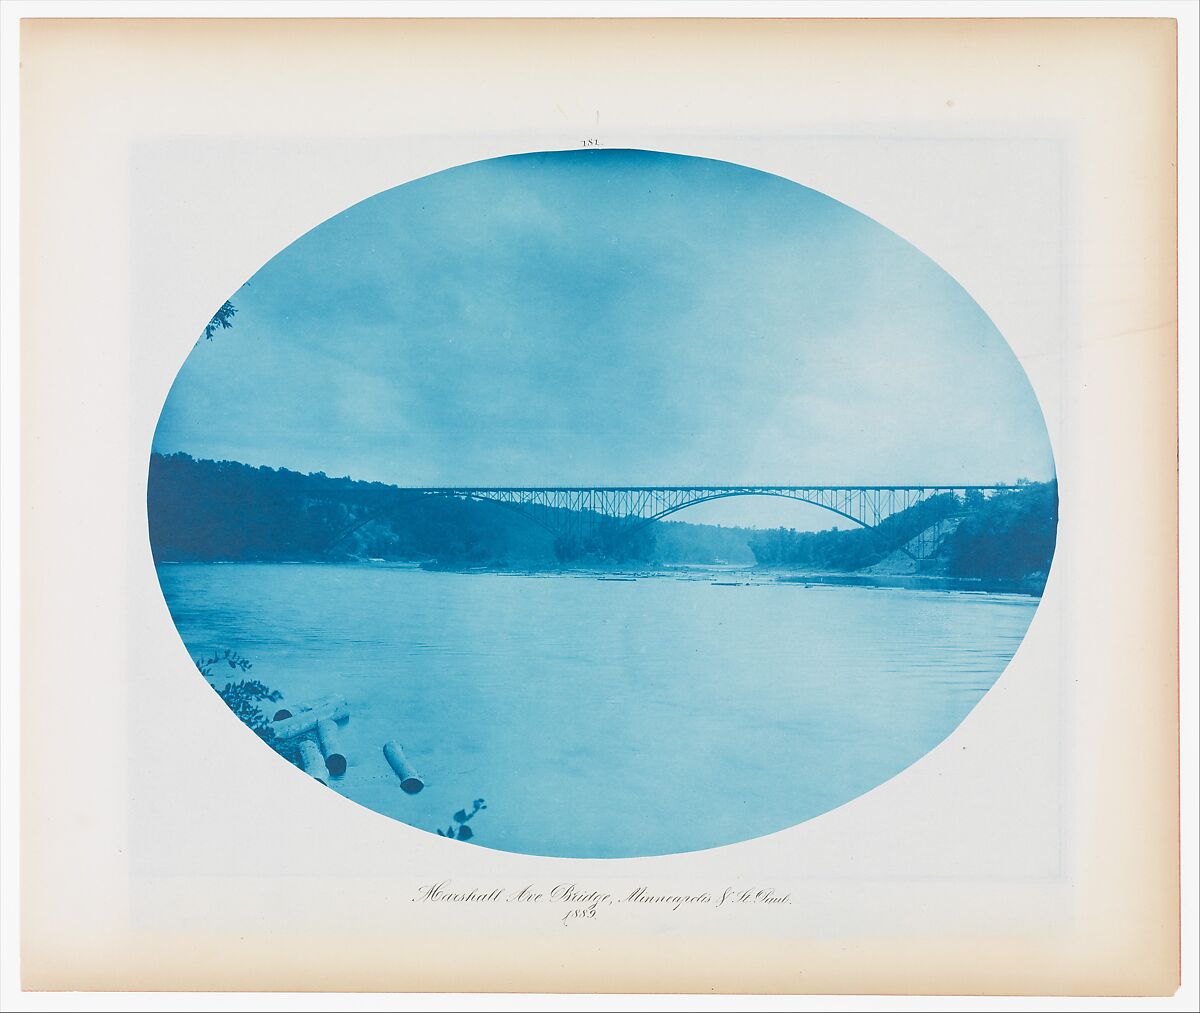 No. 181. Marshall Ave. Bridge, Minneapolis & St. Paul, Henry P. Bosse (American (born Germany), 1844–1893), Cyanotype 